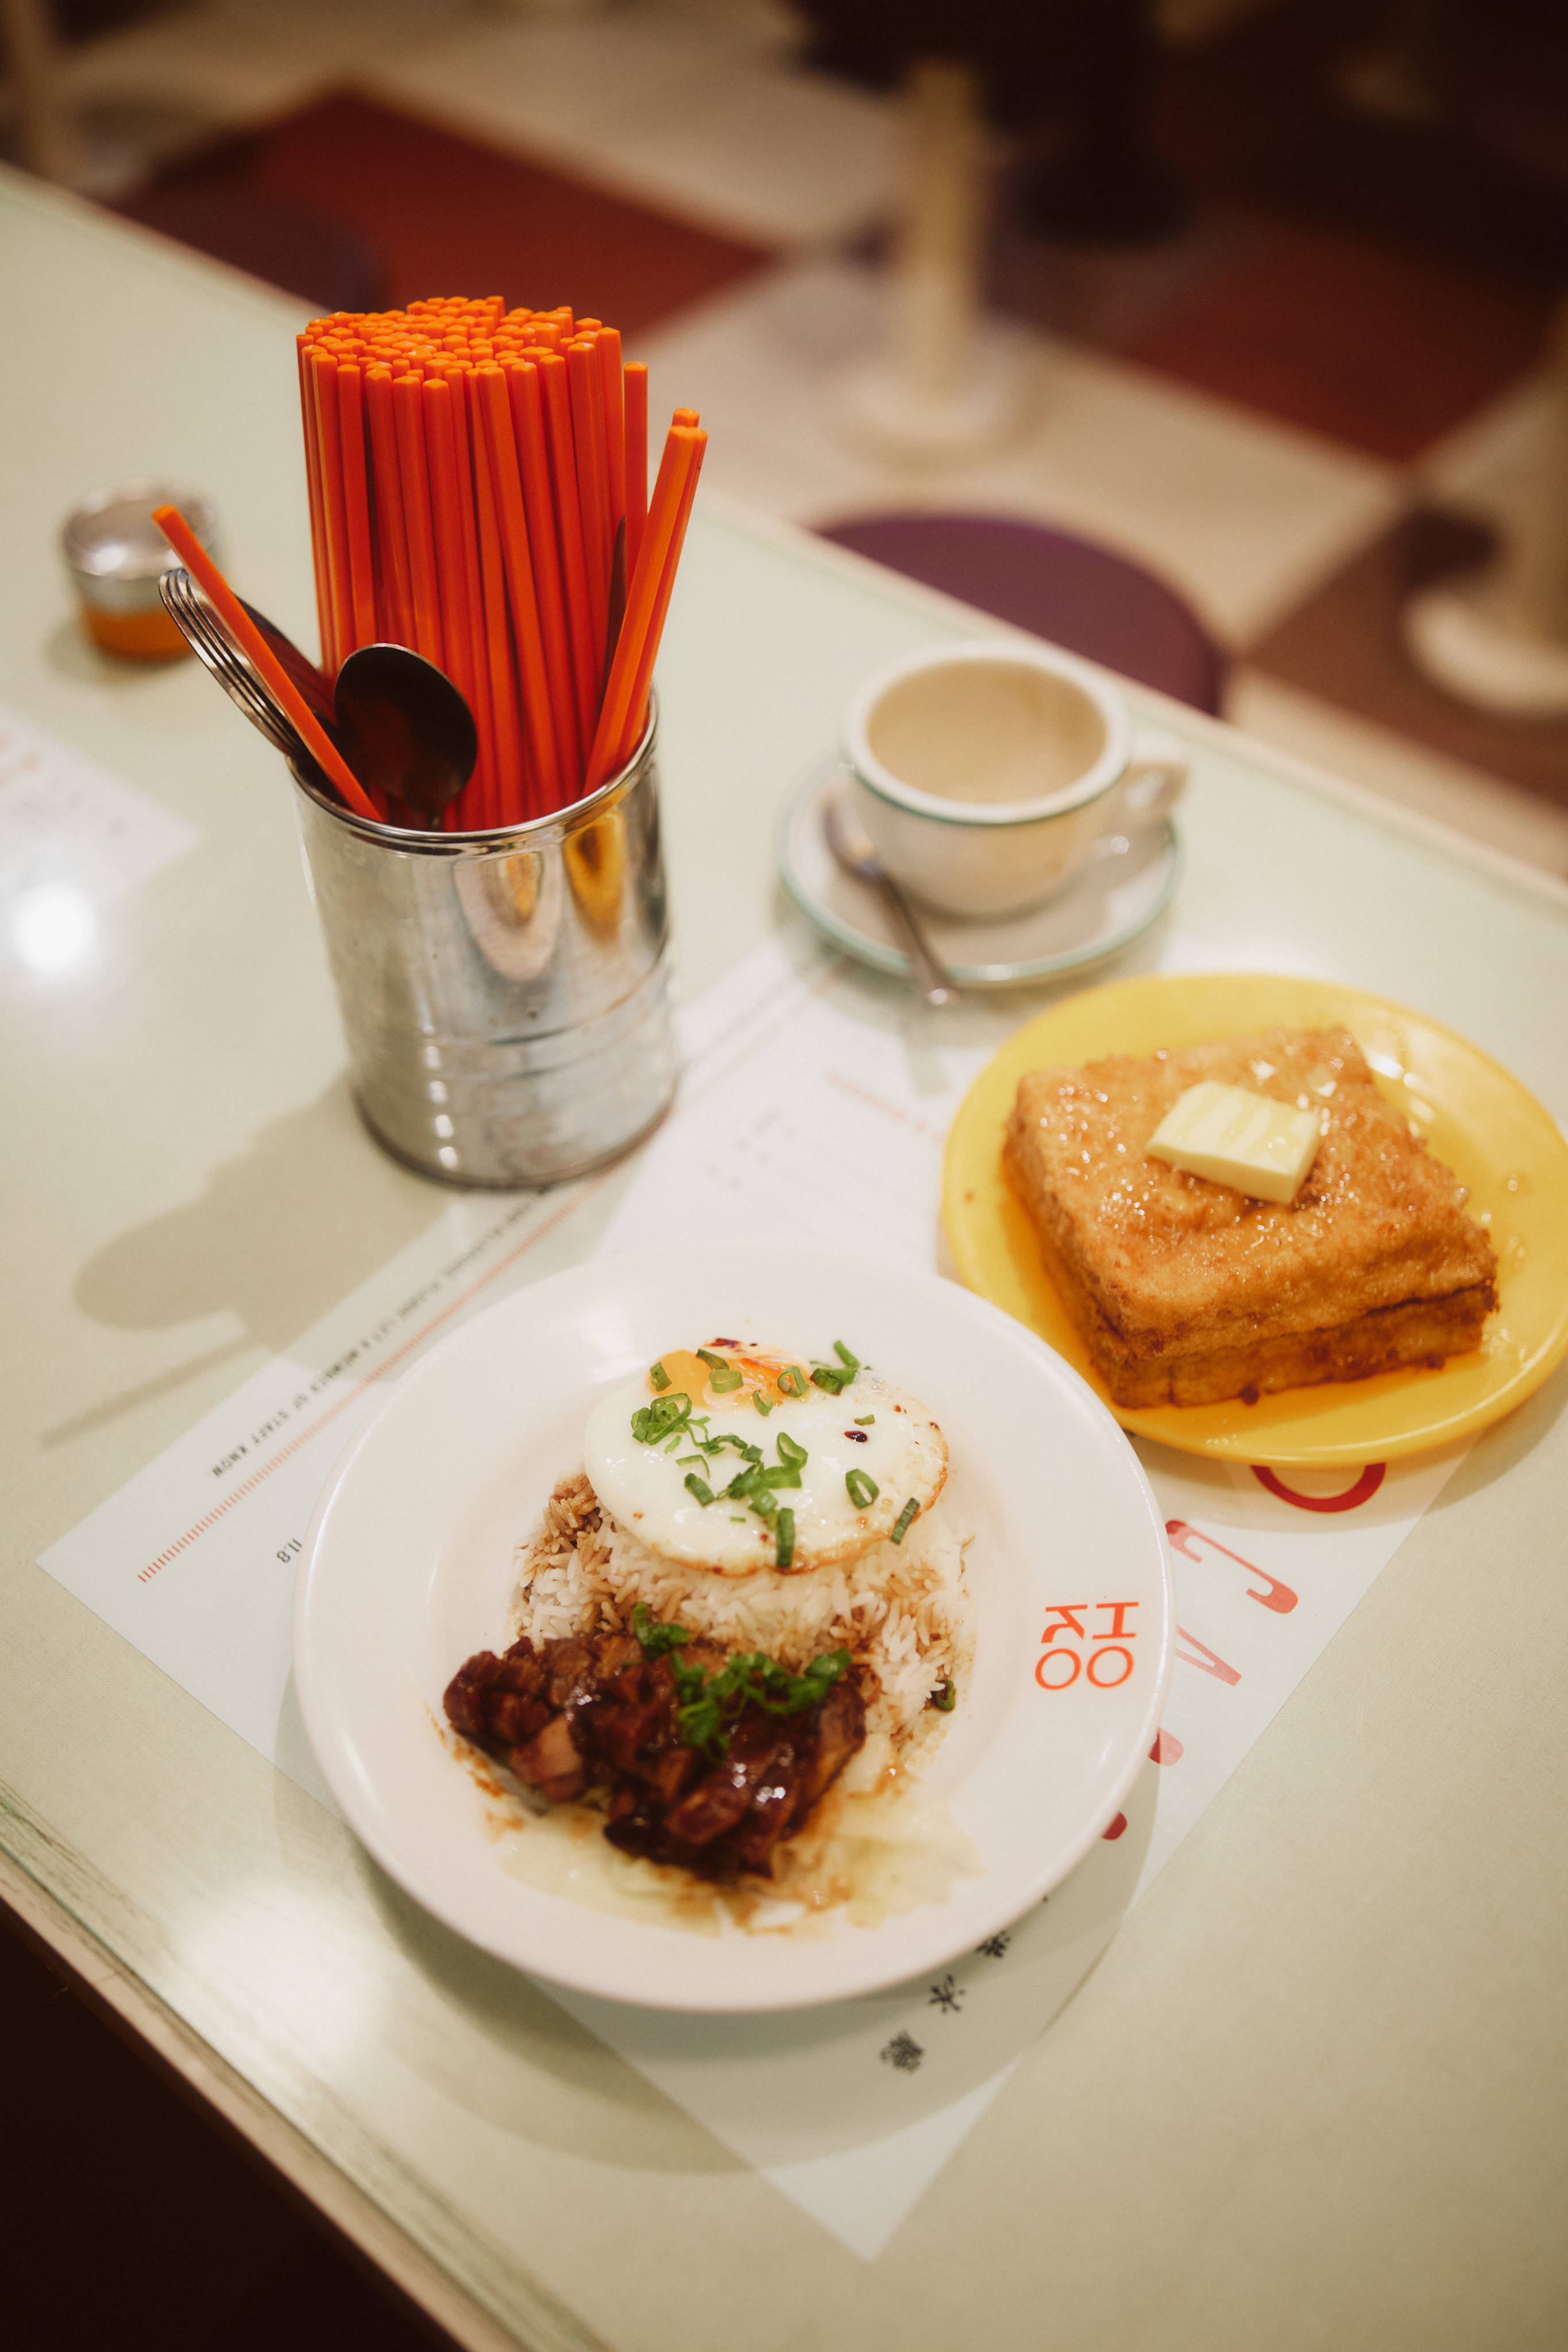 Hoko Cafe’s signatures include char siu and egg over rice and French toast. Photo: Hoko